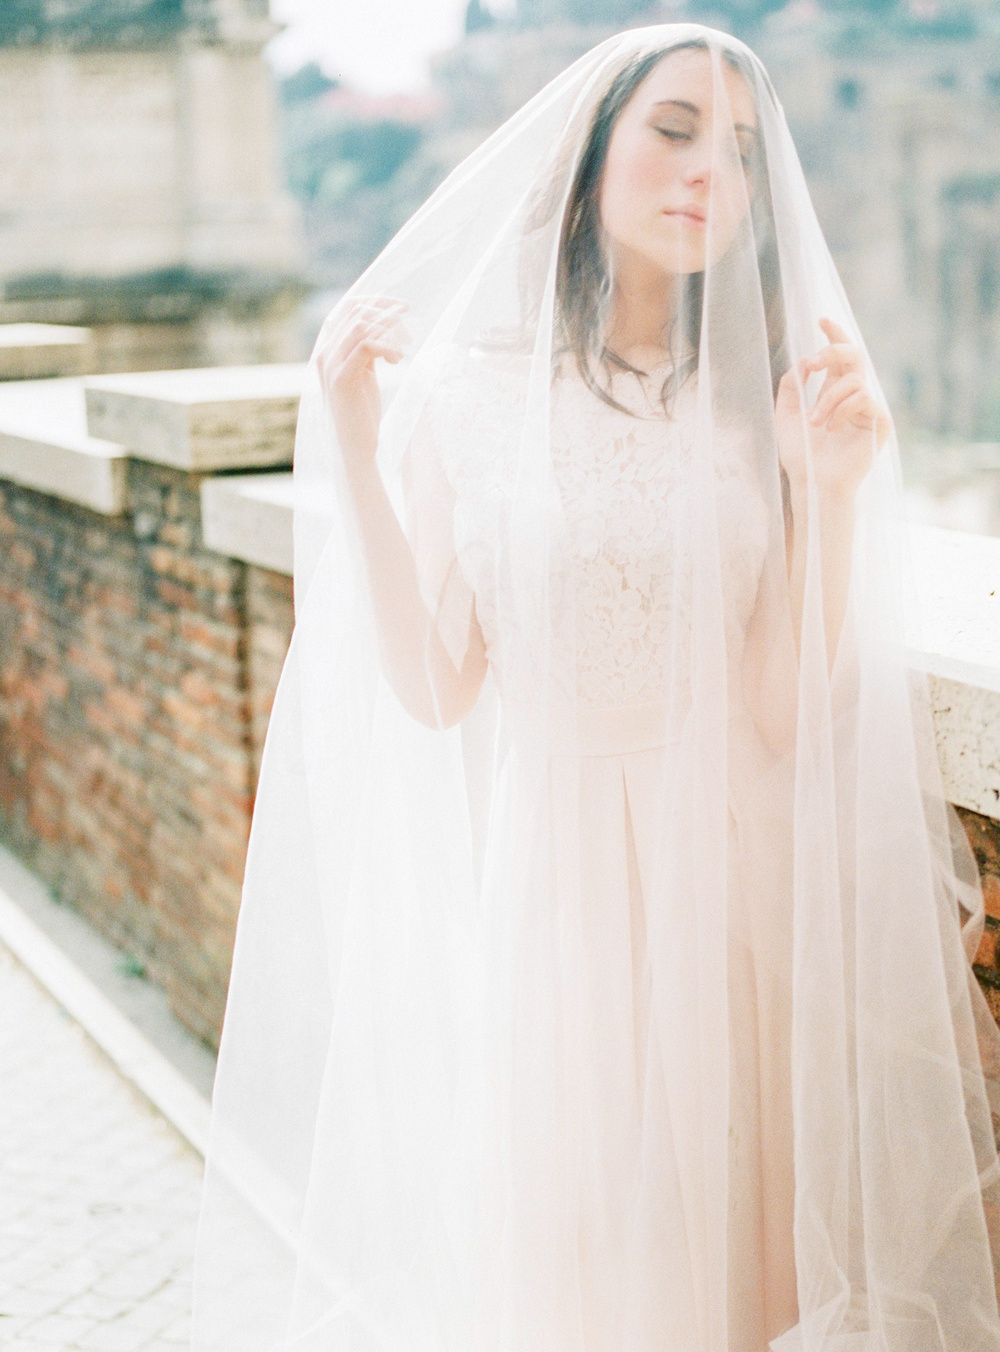 Bridal shoot in Rome